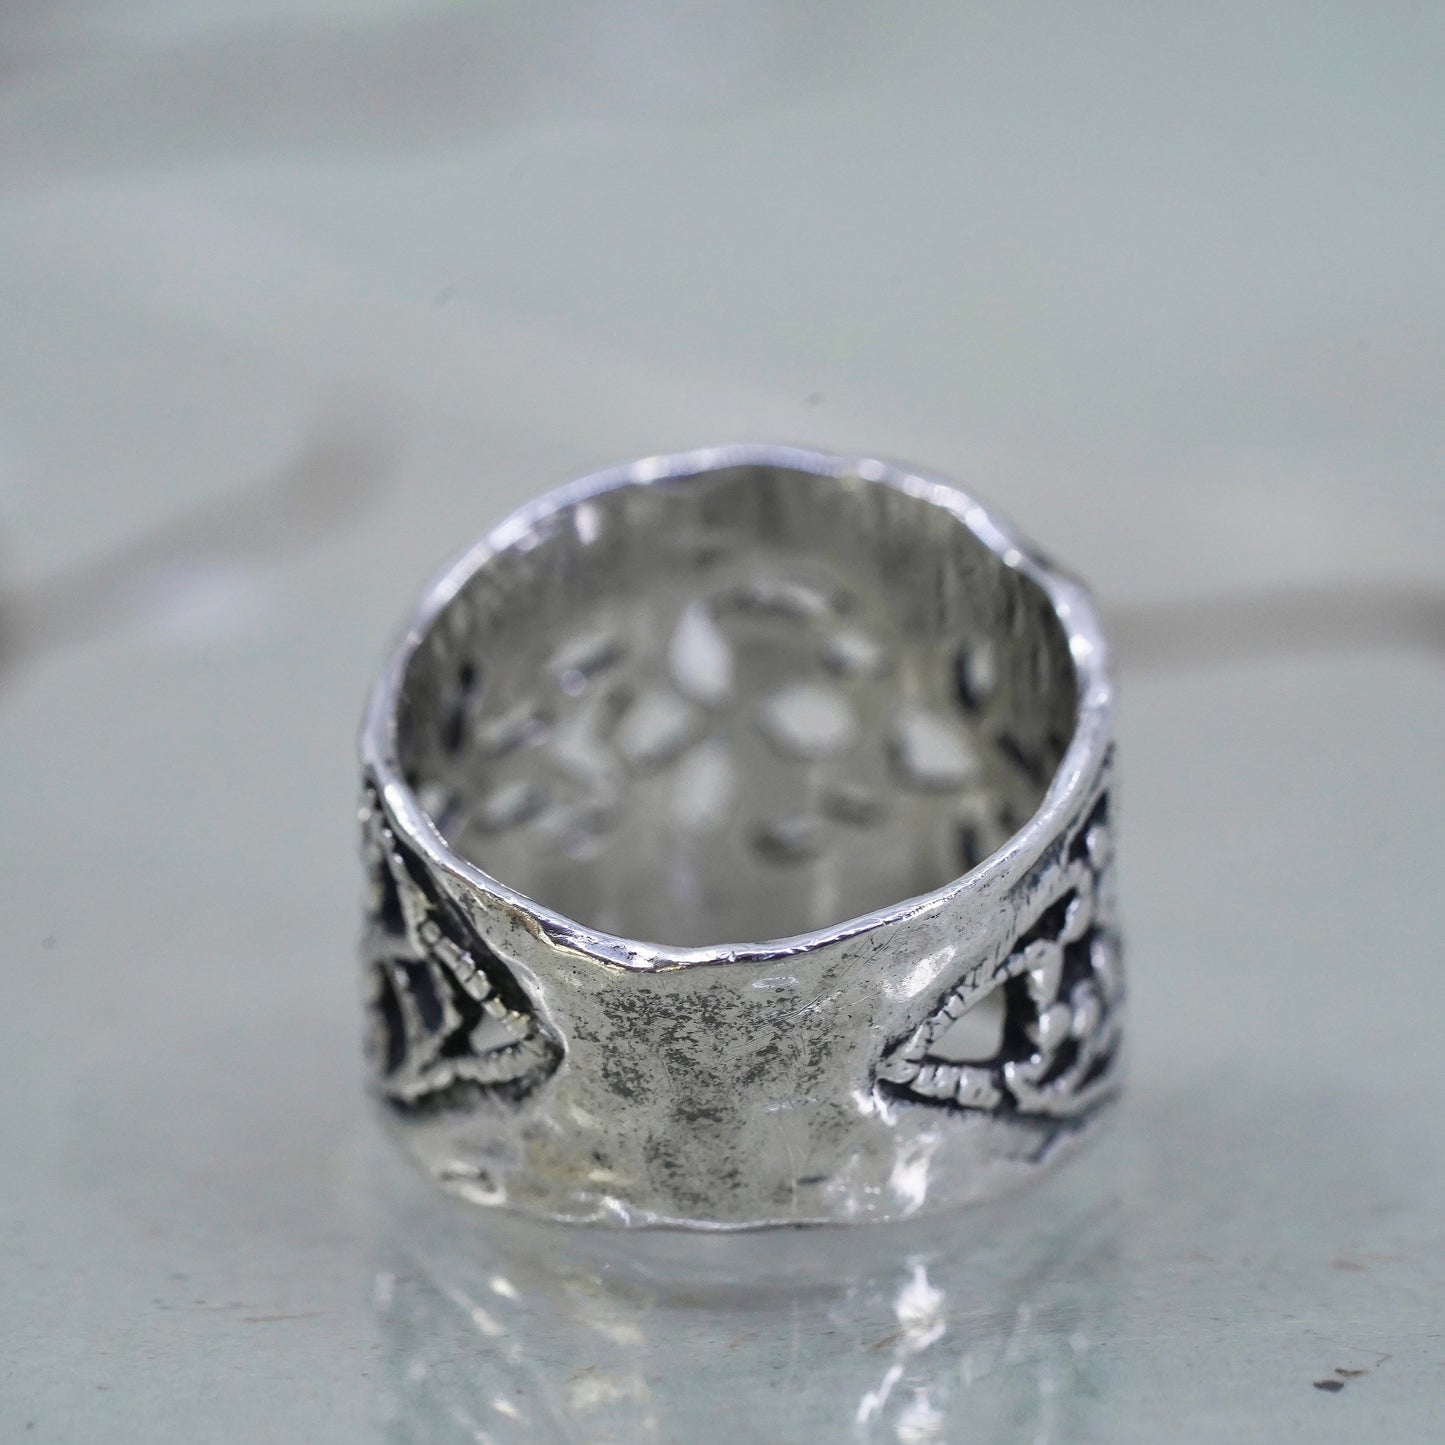 Size 4.25, vintage Israel Pz Or Paz Sterling silver ring, 925 wide band floral